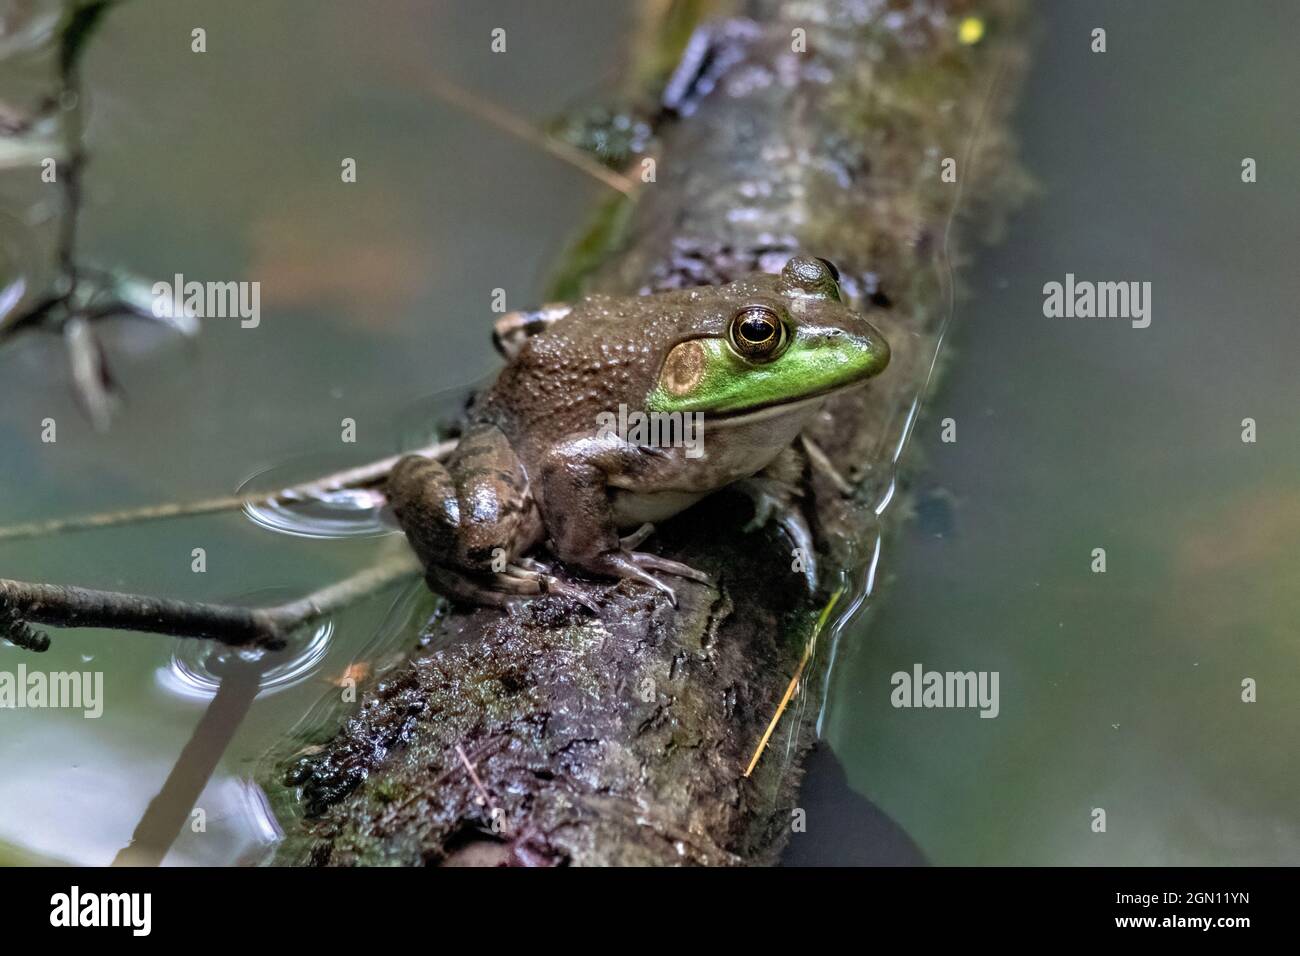 Bullfrog femminile americana (Lithobates catesbeianus) - Pisgah National Forest, Brevard, North Carolina, USA Foto Stock